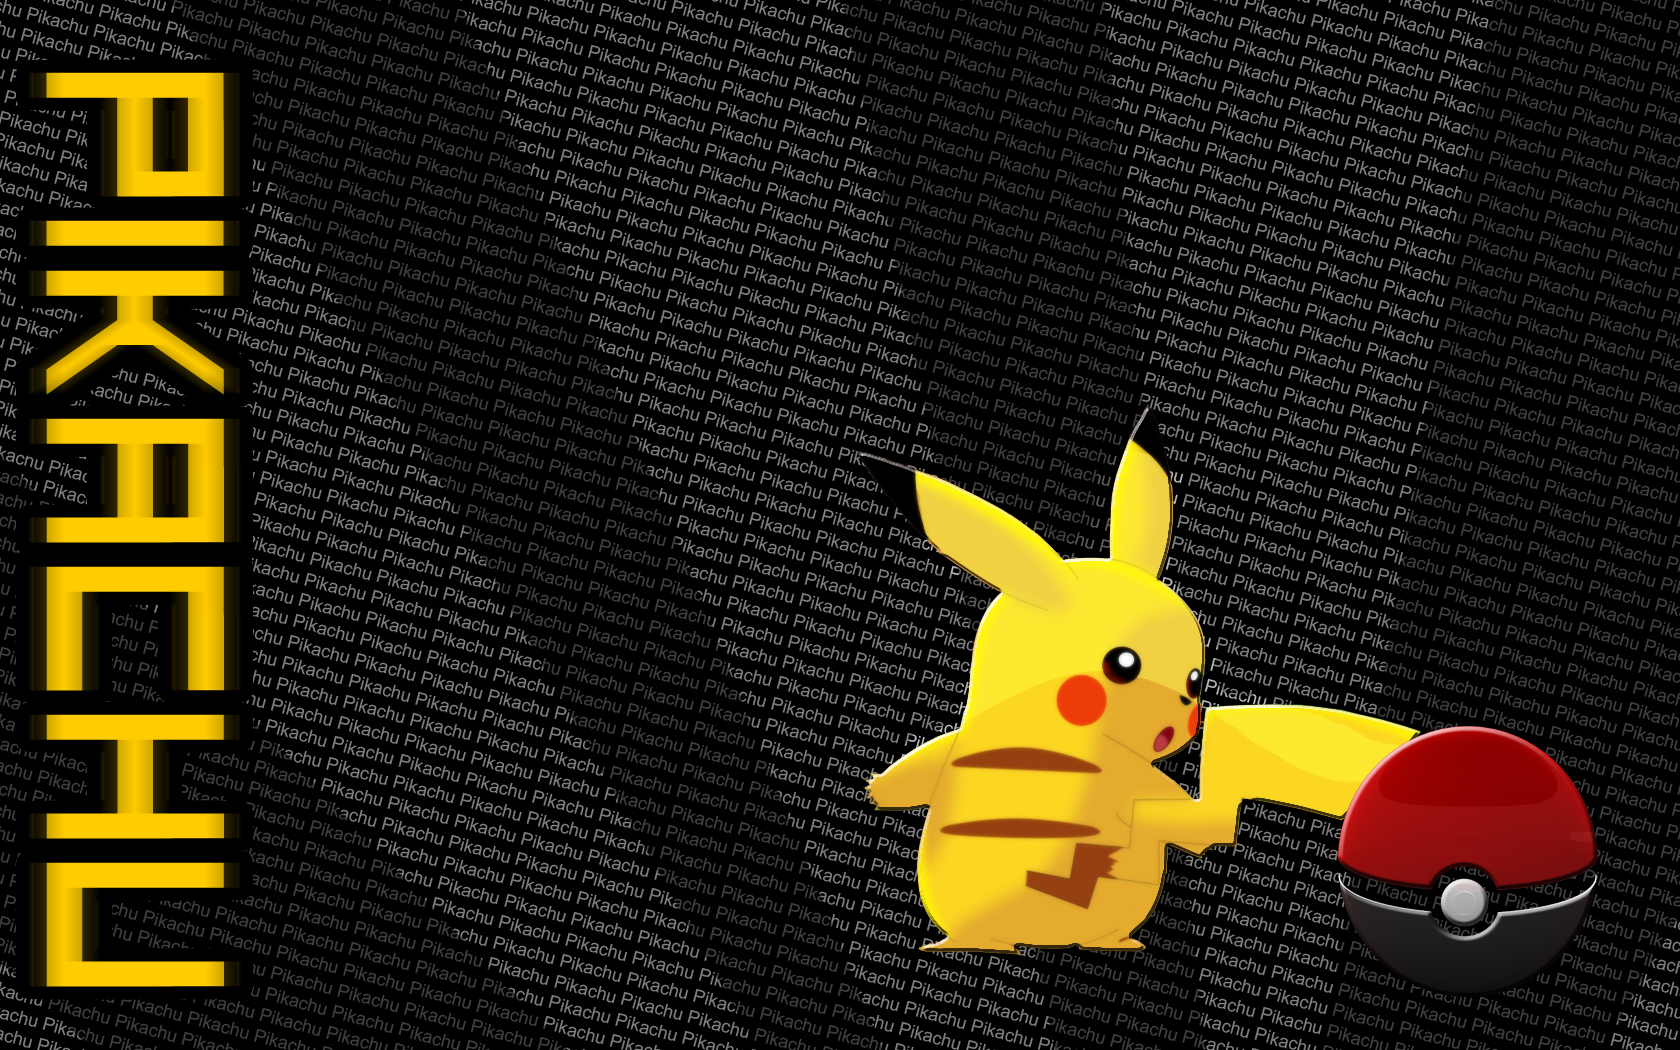 Pikachu Wallpaper Background